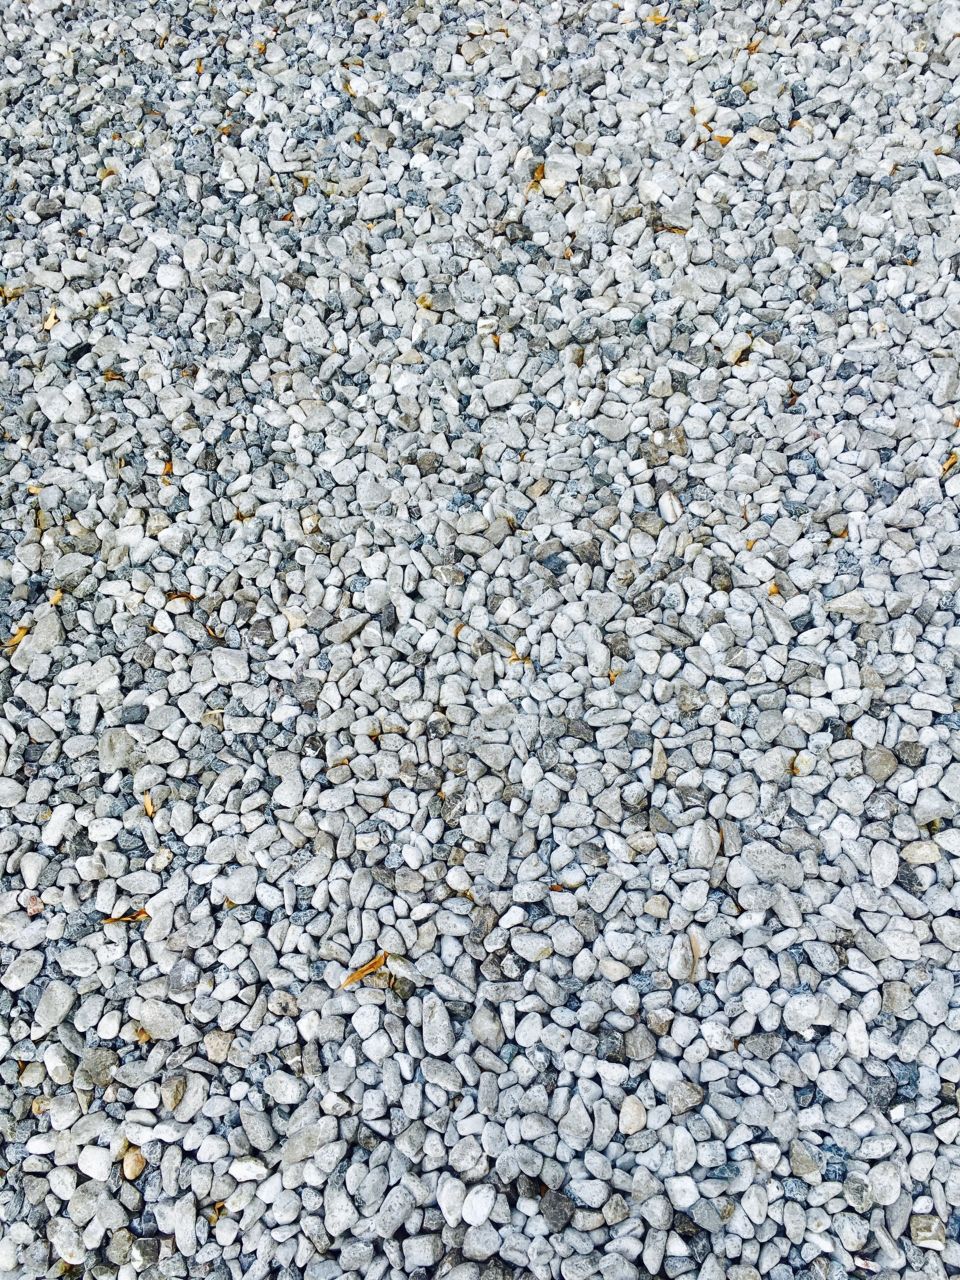 Pebbles stone background 